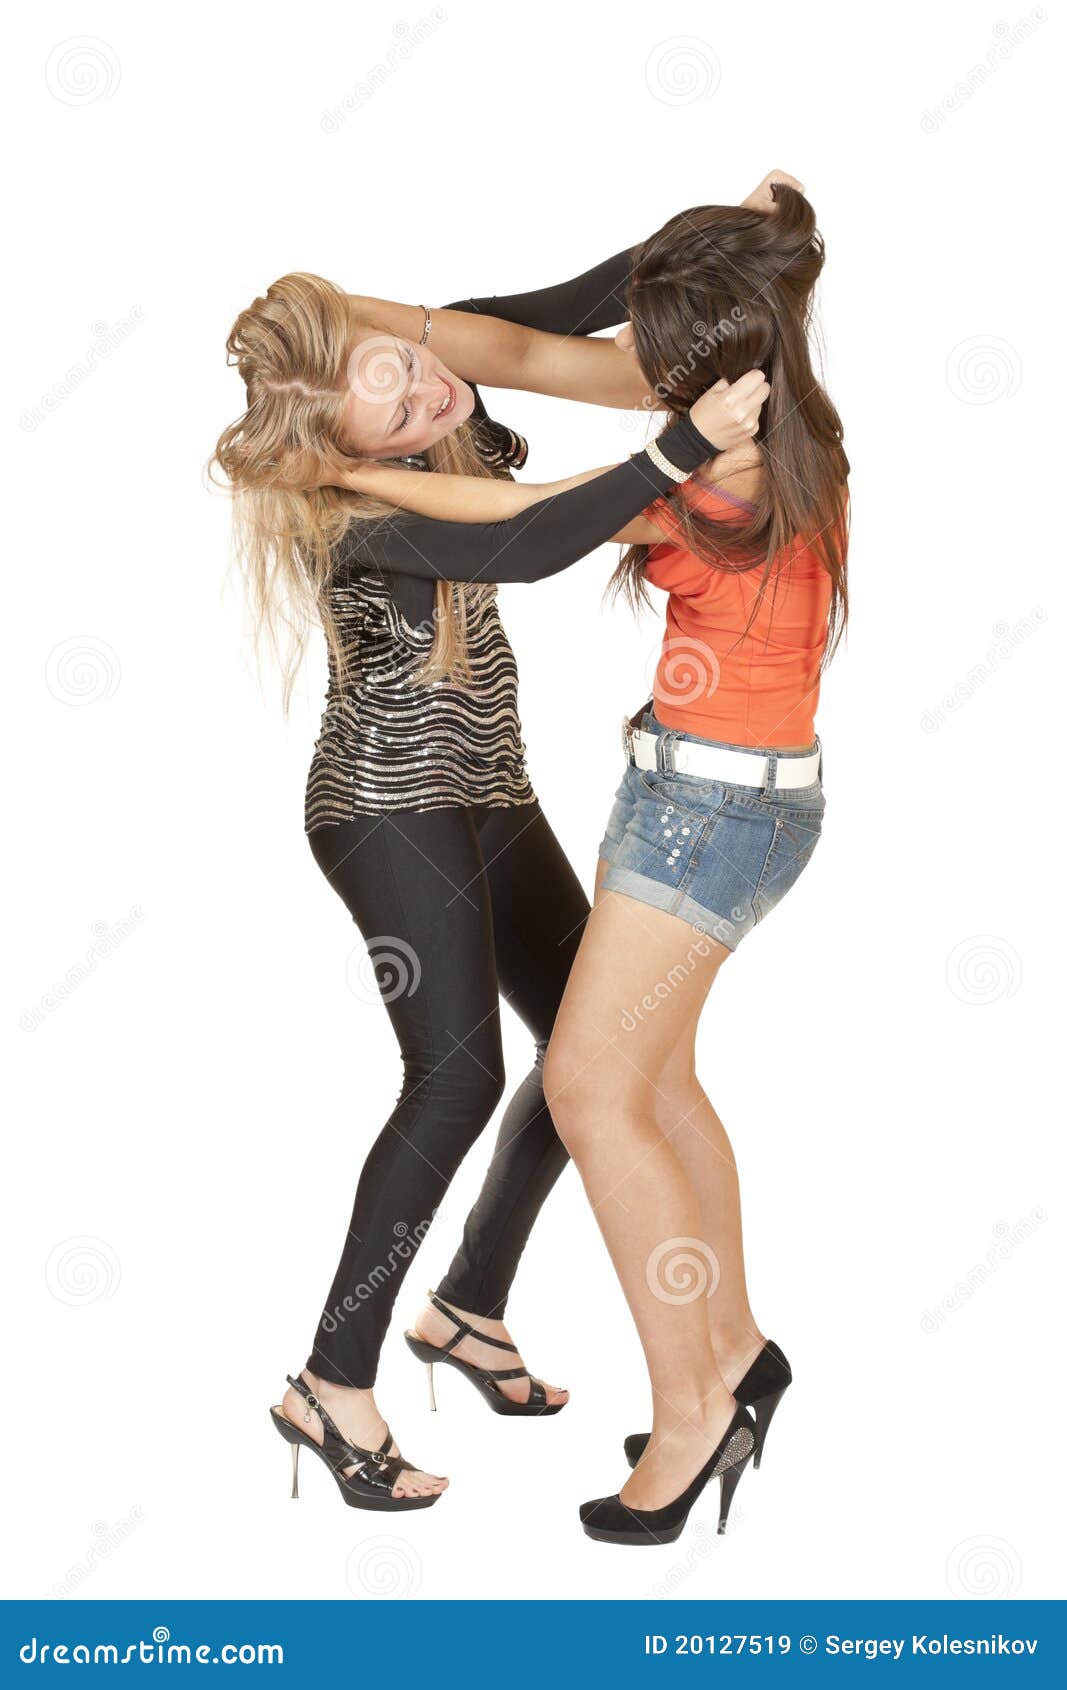 donna cosper add photo pics of girls fighting